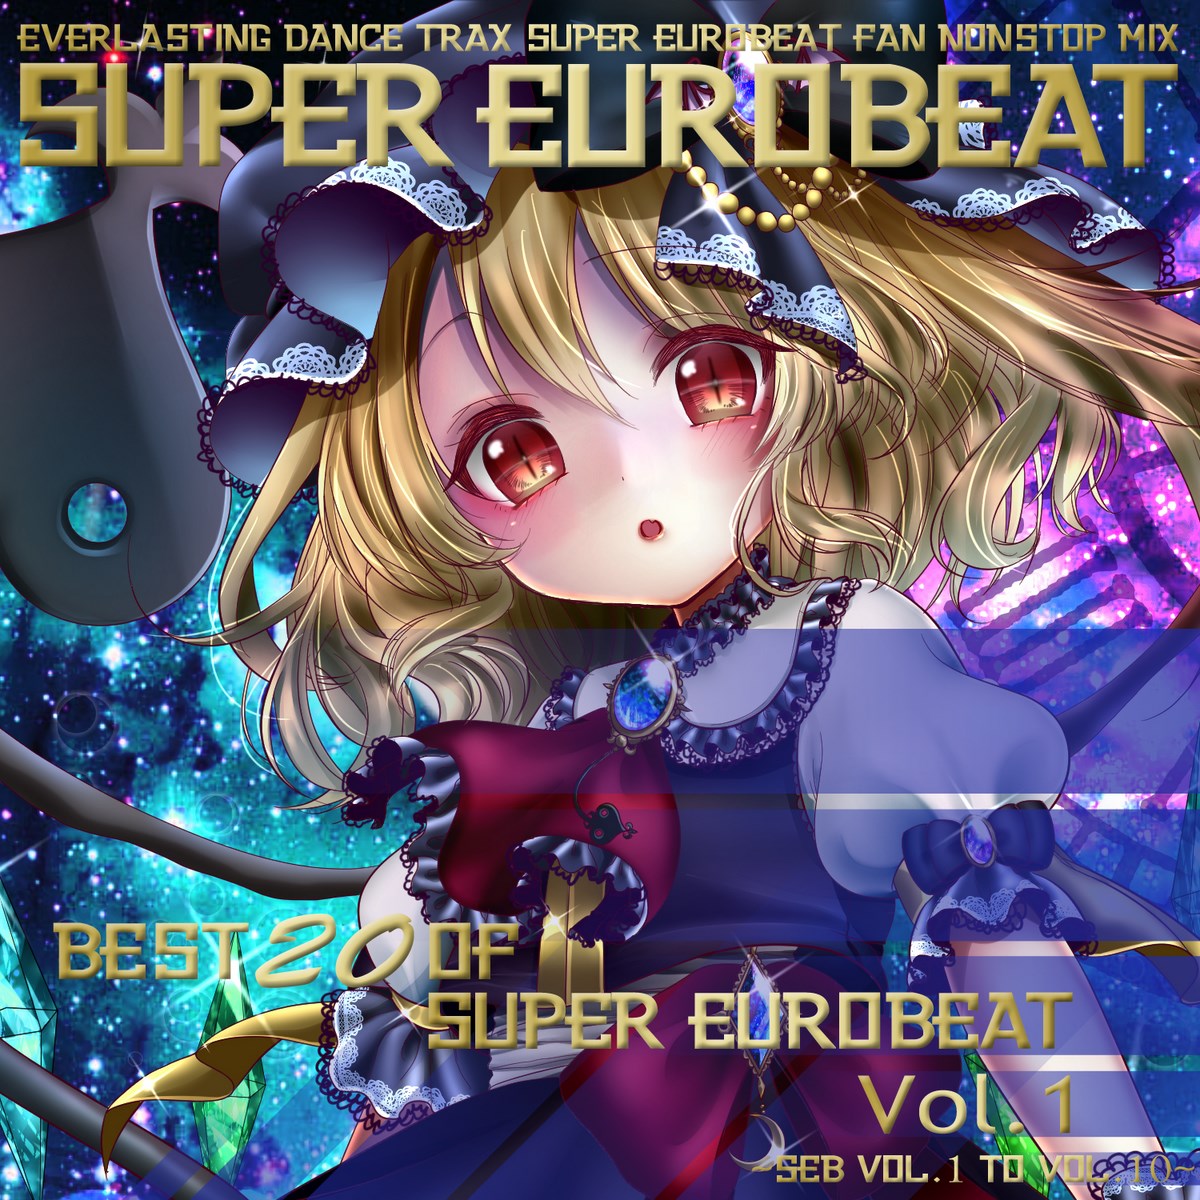 Tgcd 0007 Best Of Super Eurobeat Vol 1 Seb Vol 1 To Vol 10 The Good Records